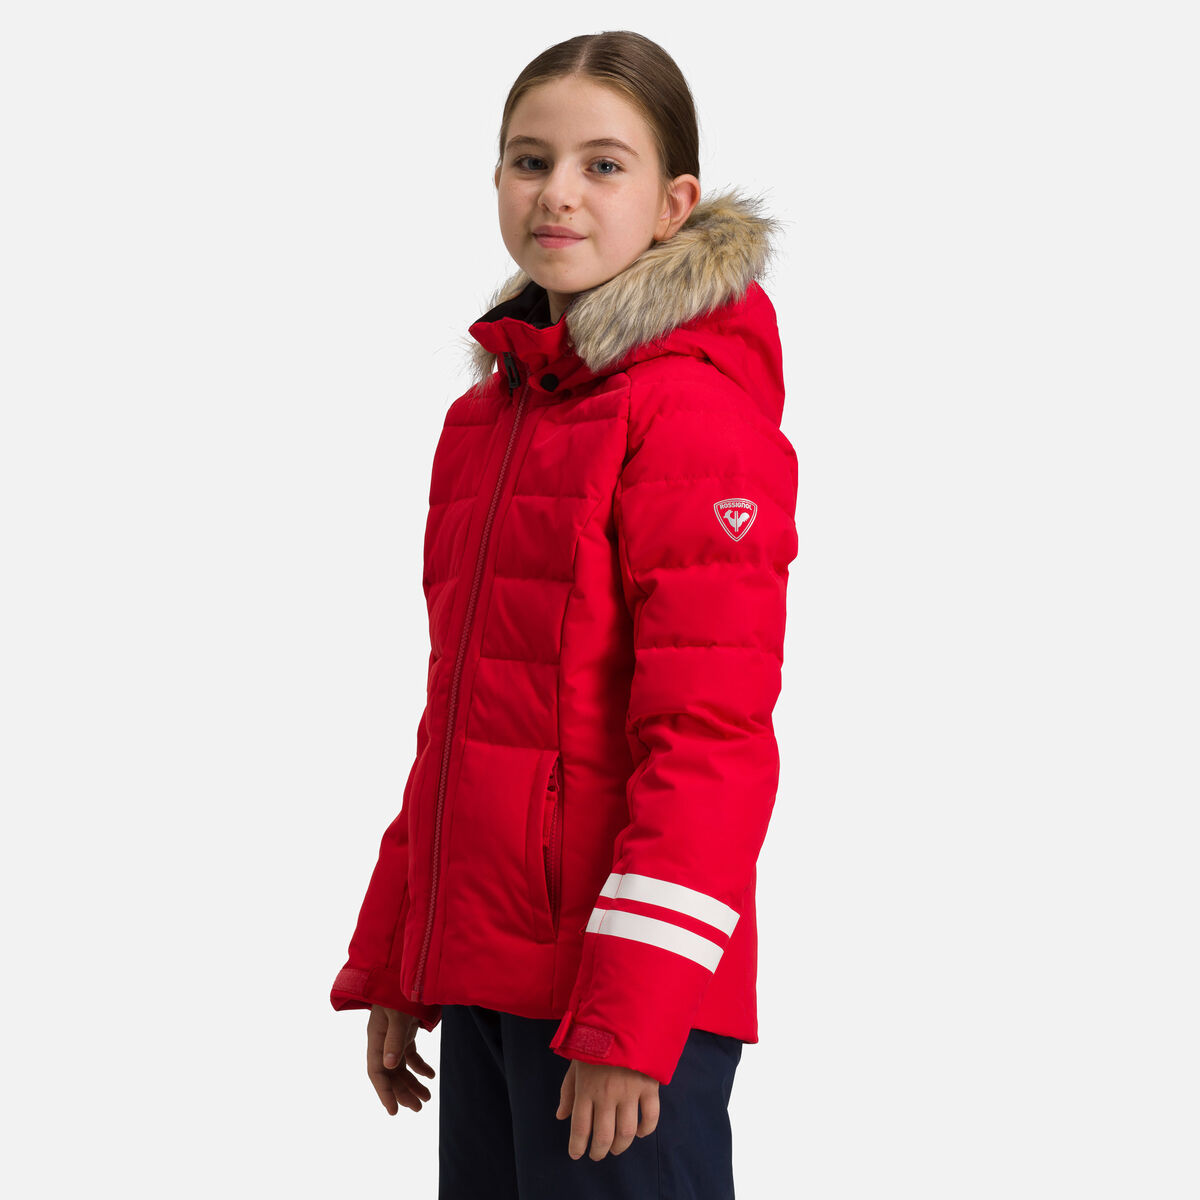 Rossignol Girls' Polydown Ski Jacket red